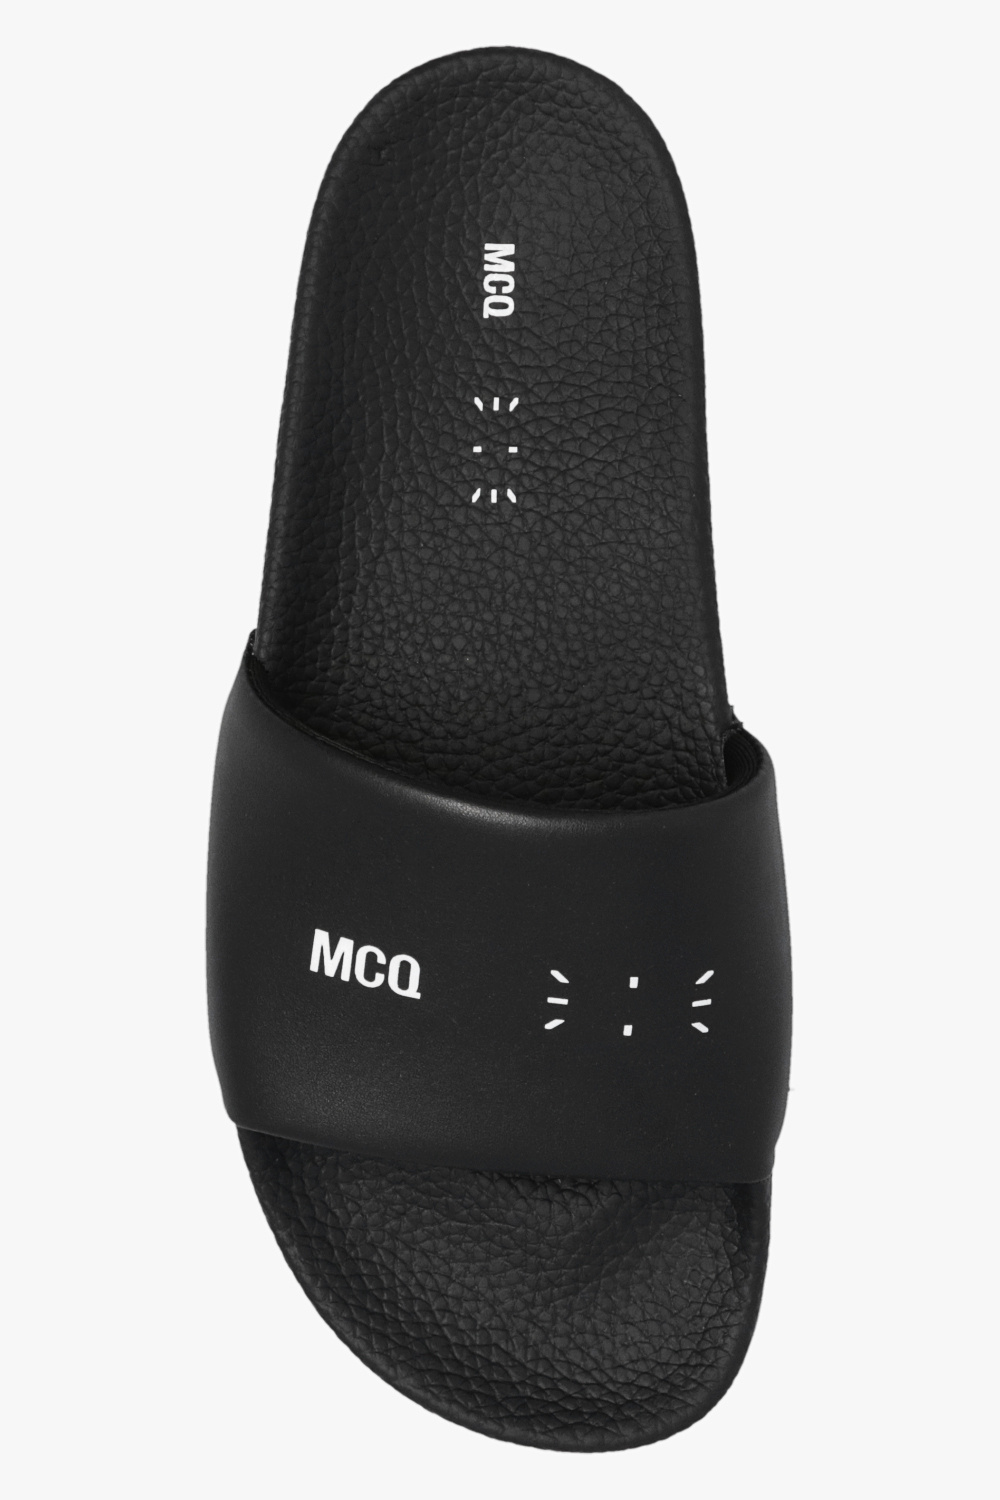 MCQ Ugg ultra mini ii boot brown кроссовки кеды высокое качество